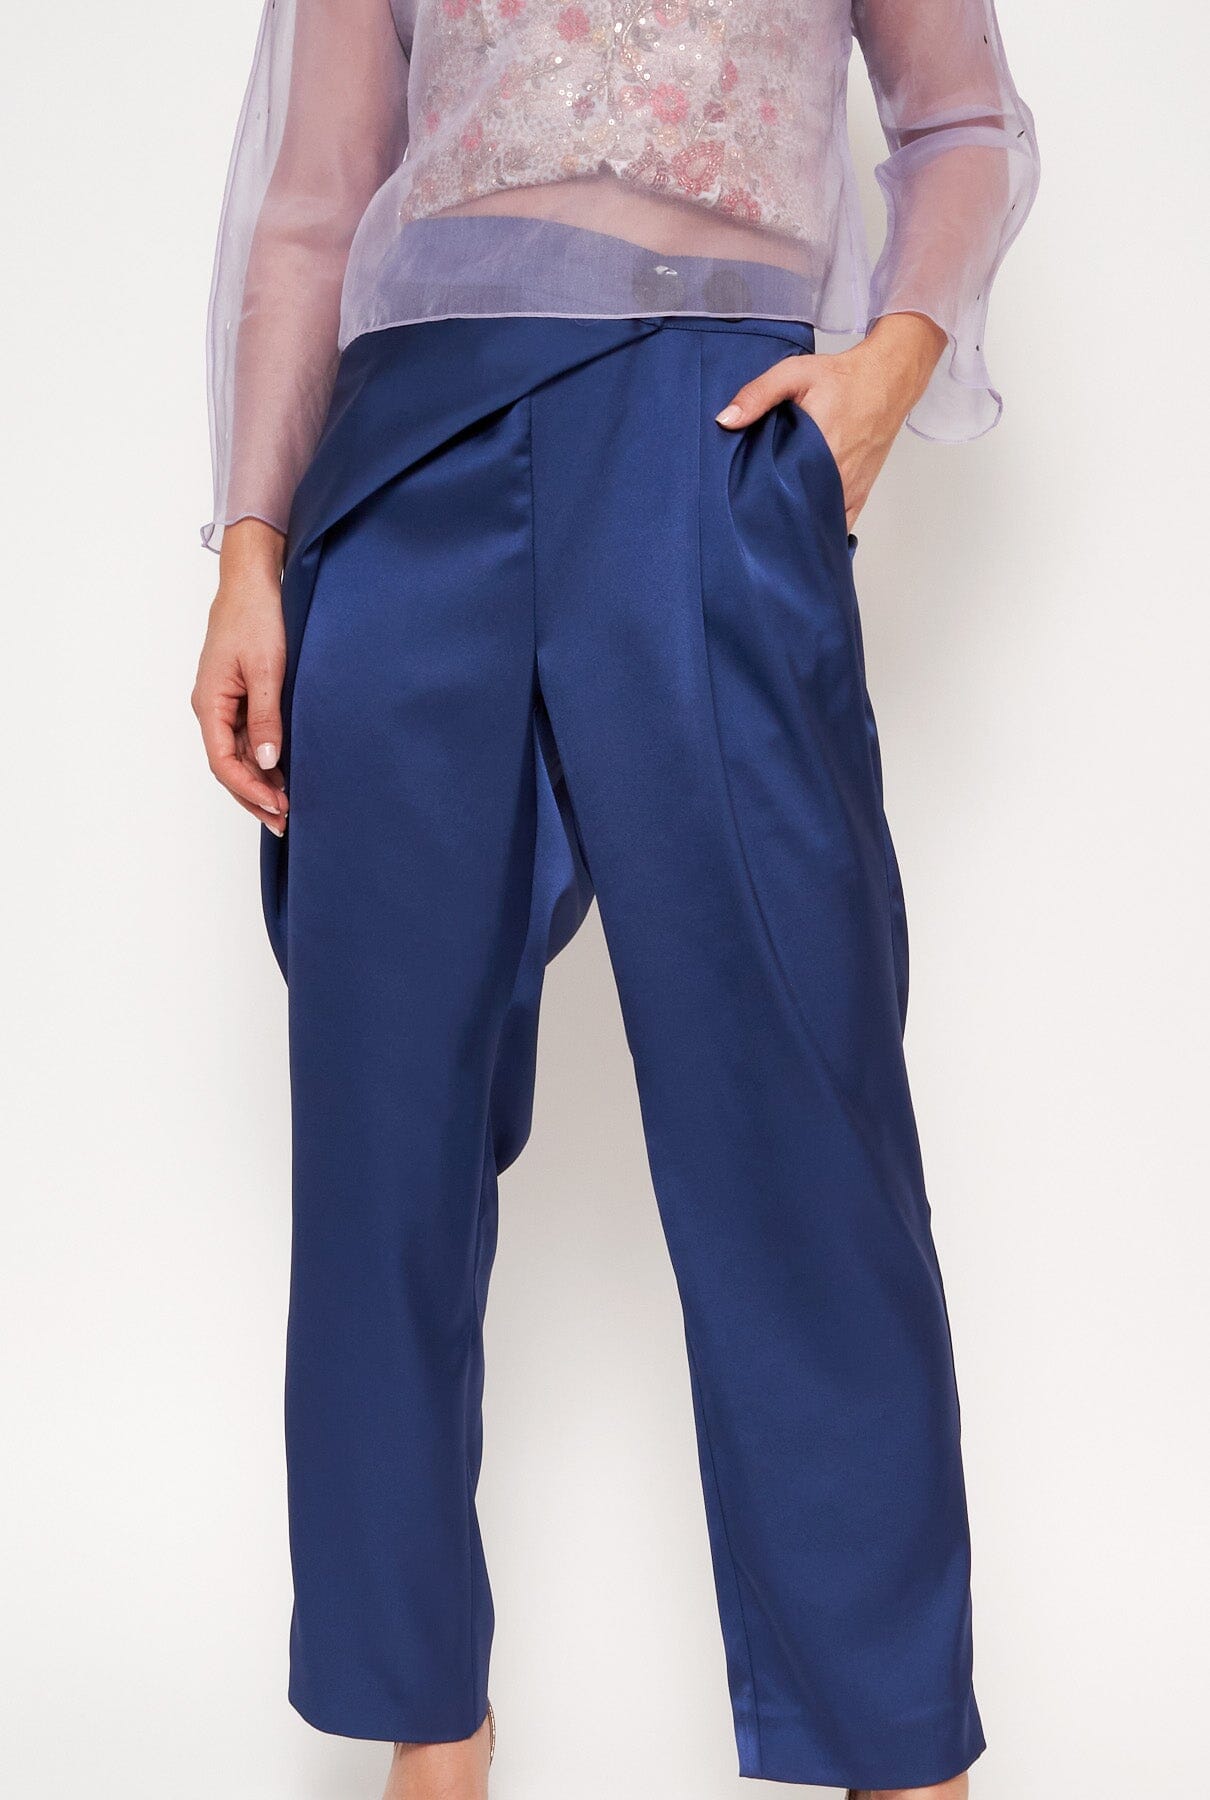 Mantalon for Es Fascinante: Navy Blue (PRE-SALE) Trousers Mantalon 